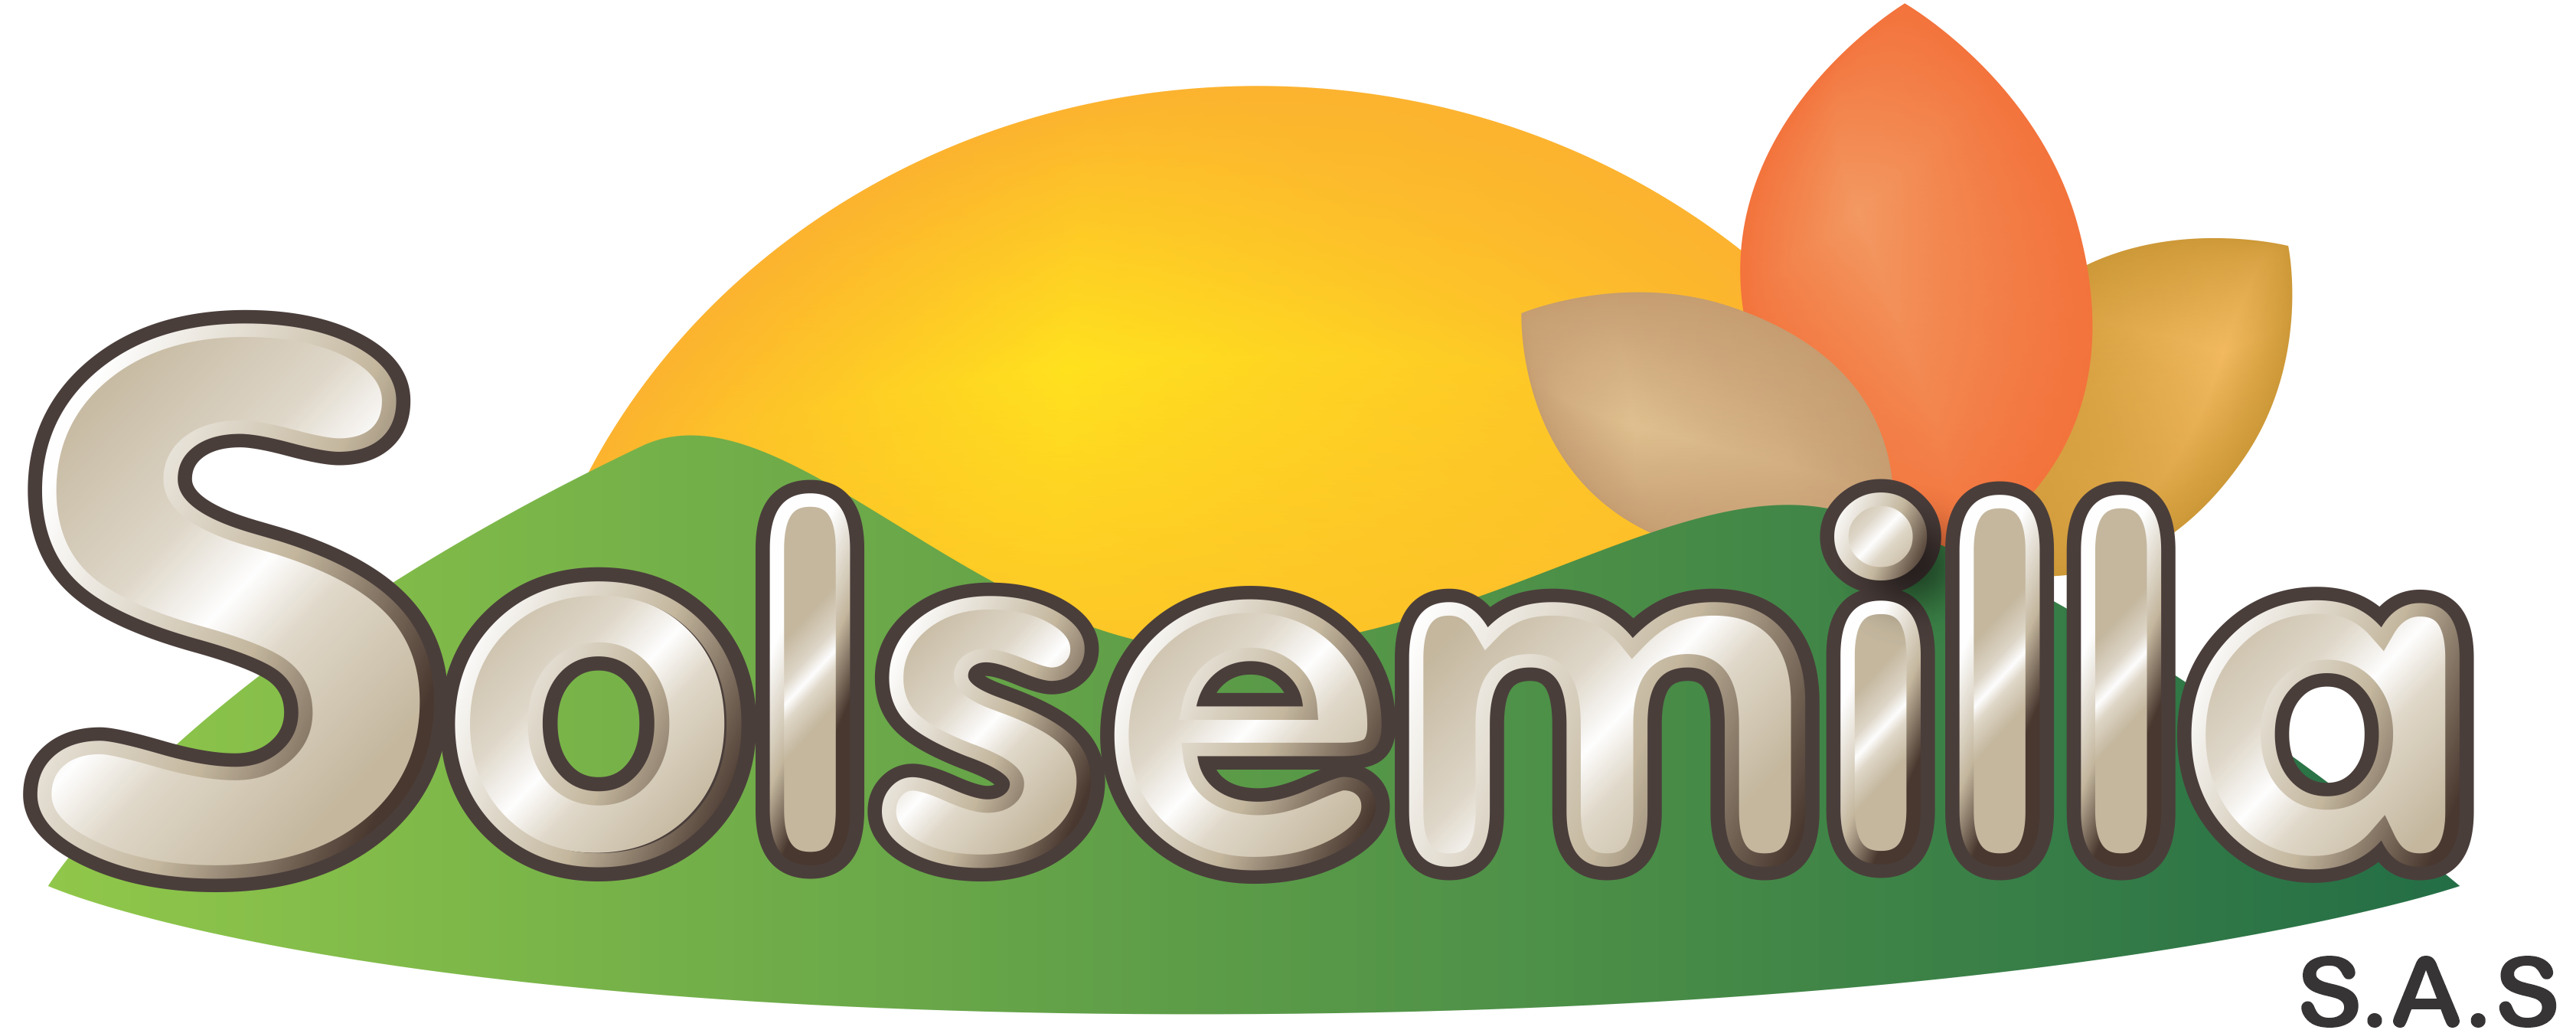 Solsemilla Logotipo